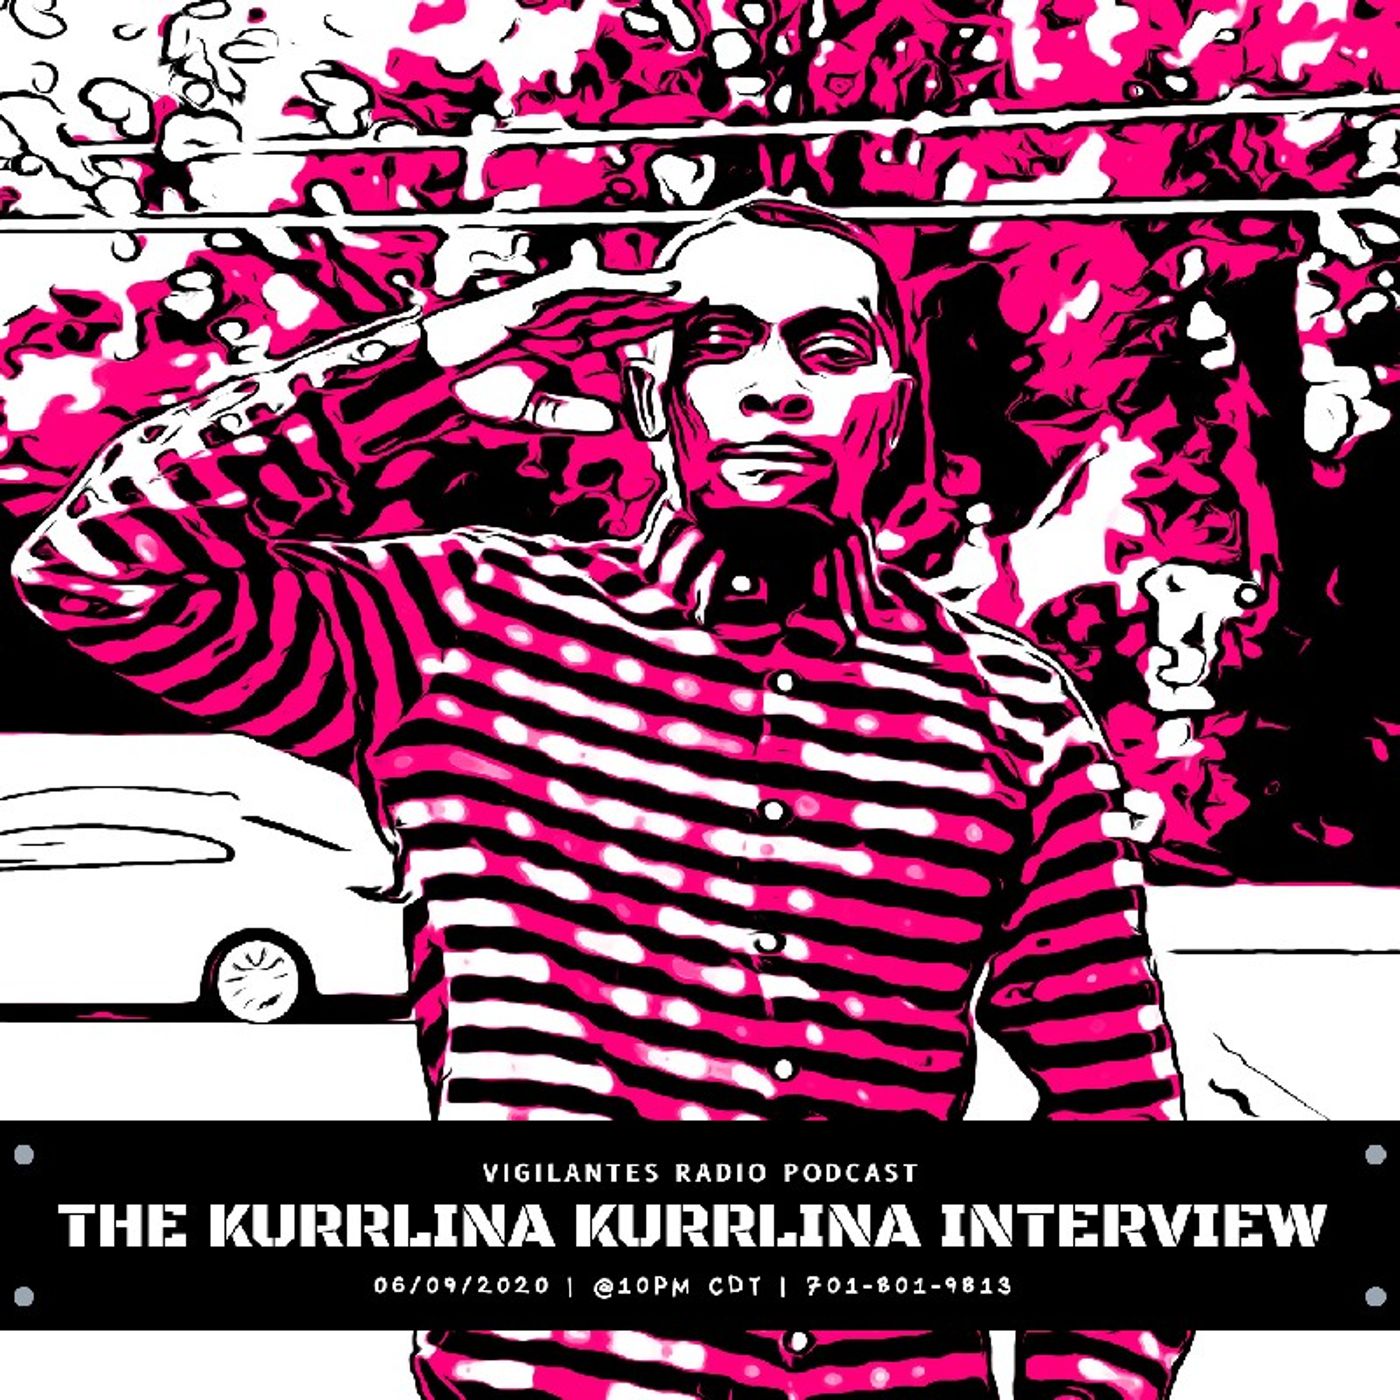 The Kurrlina Kurrlina Interview. Image